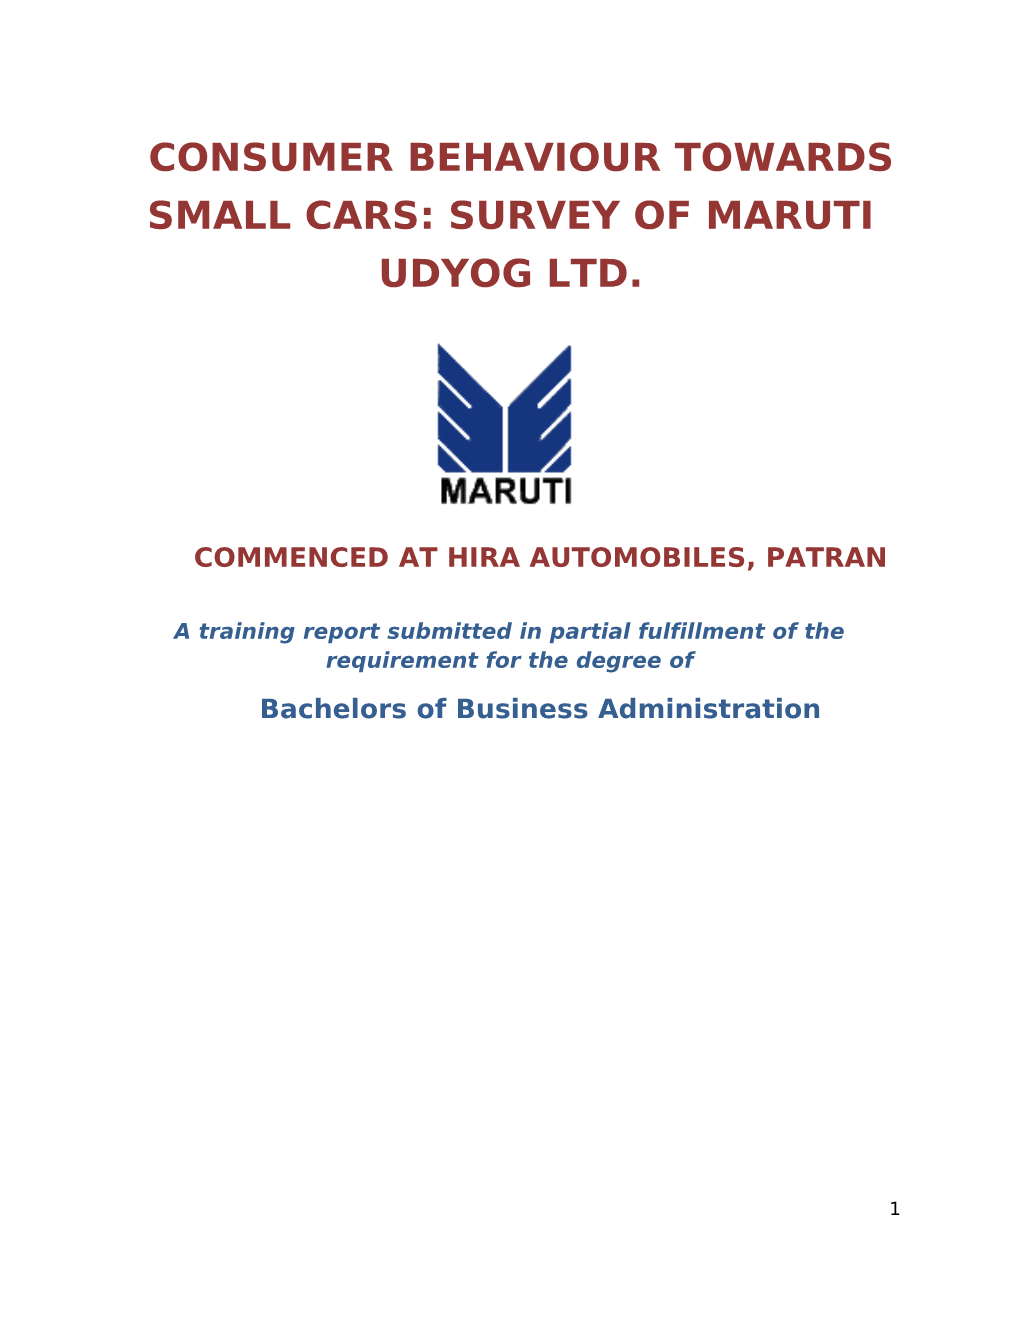 Consumer Behaviour Towards Small Cars: Survey of Maruti Udyog Ltd